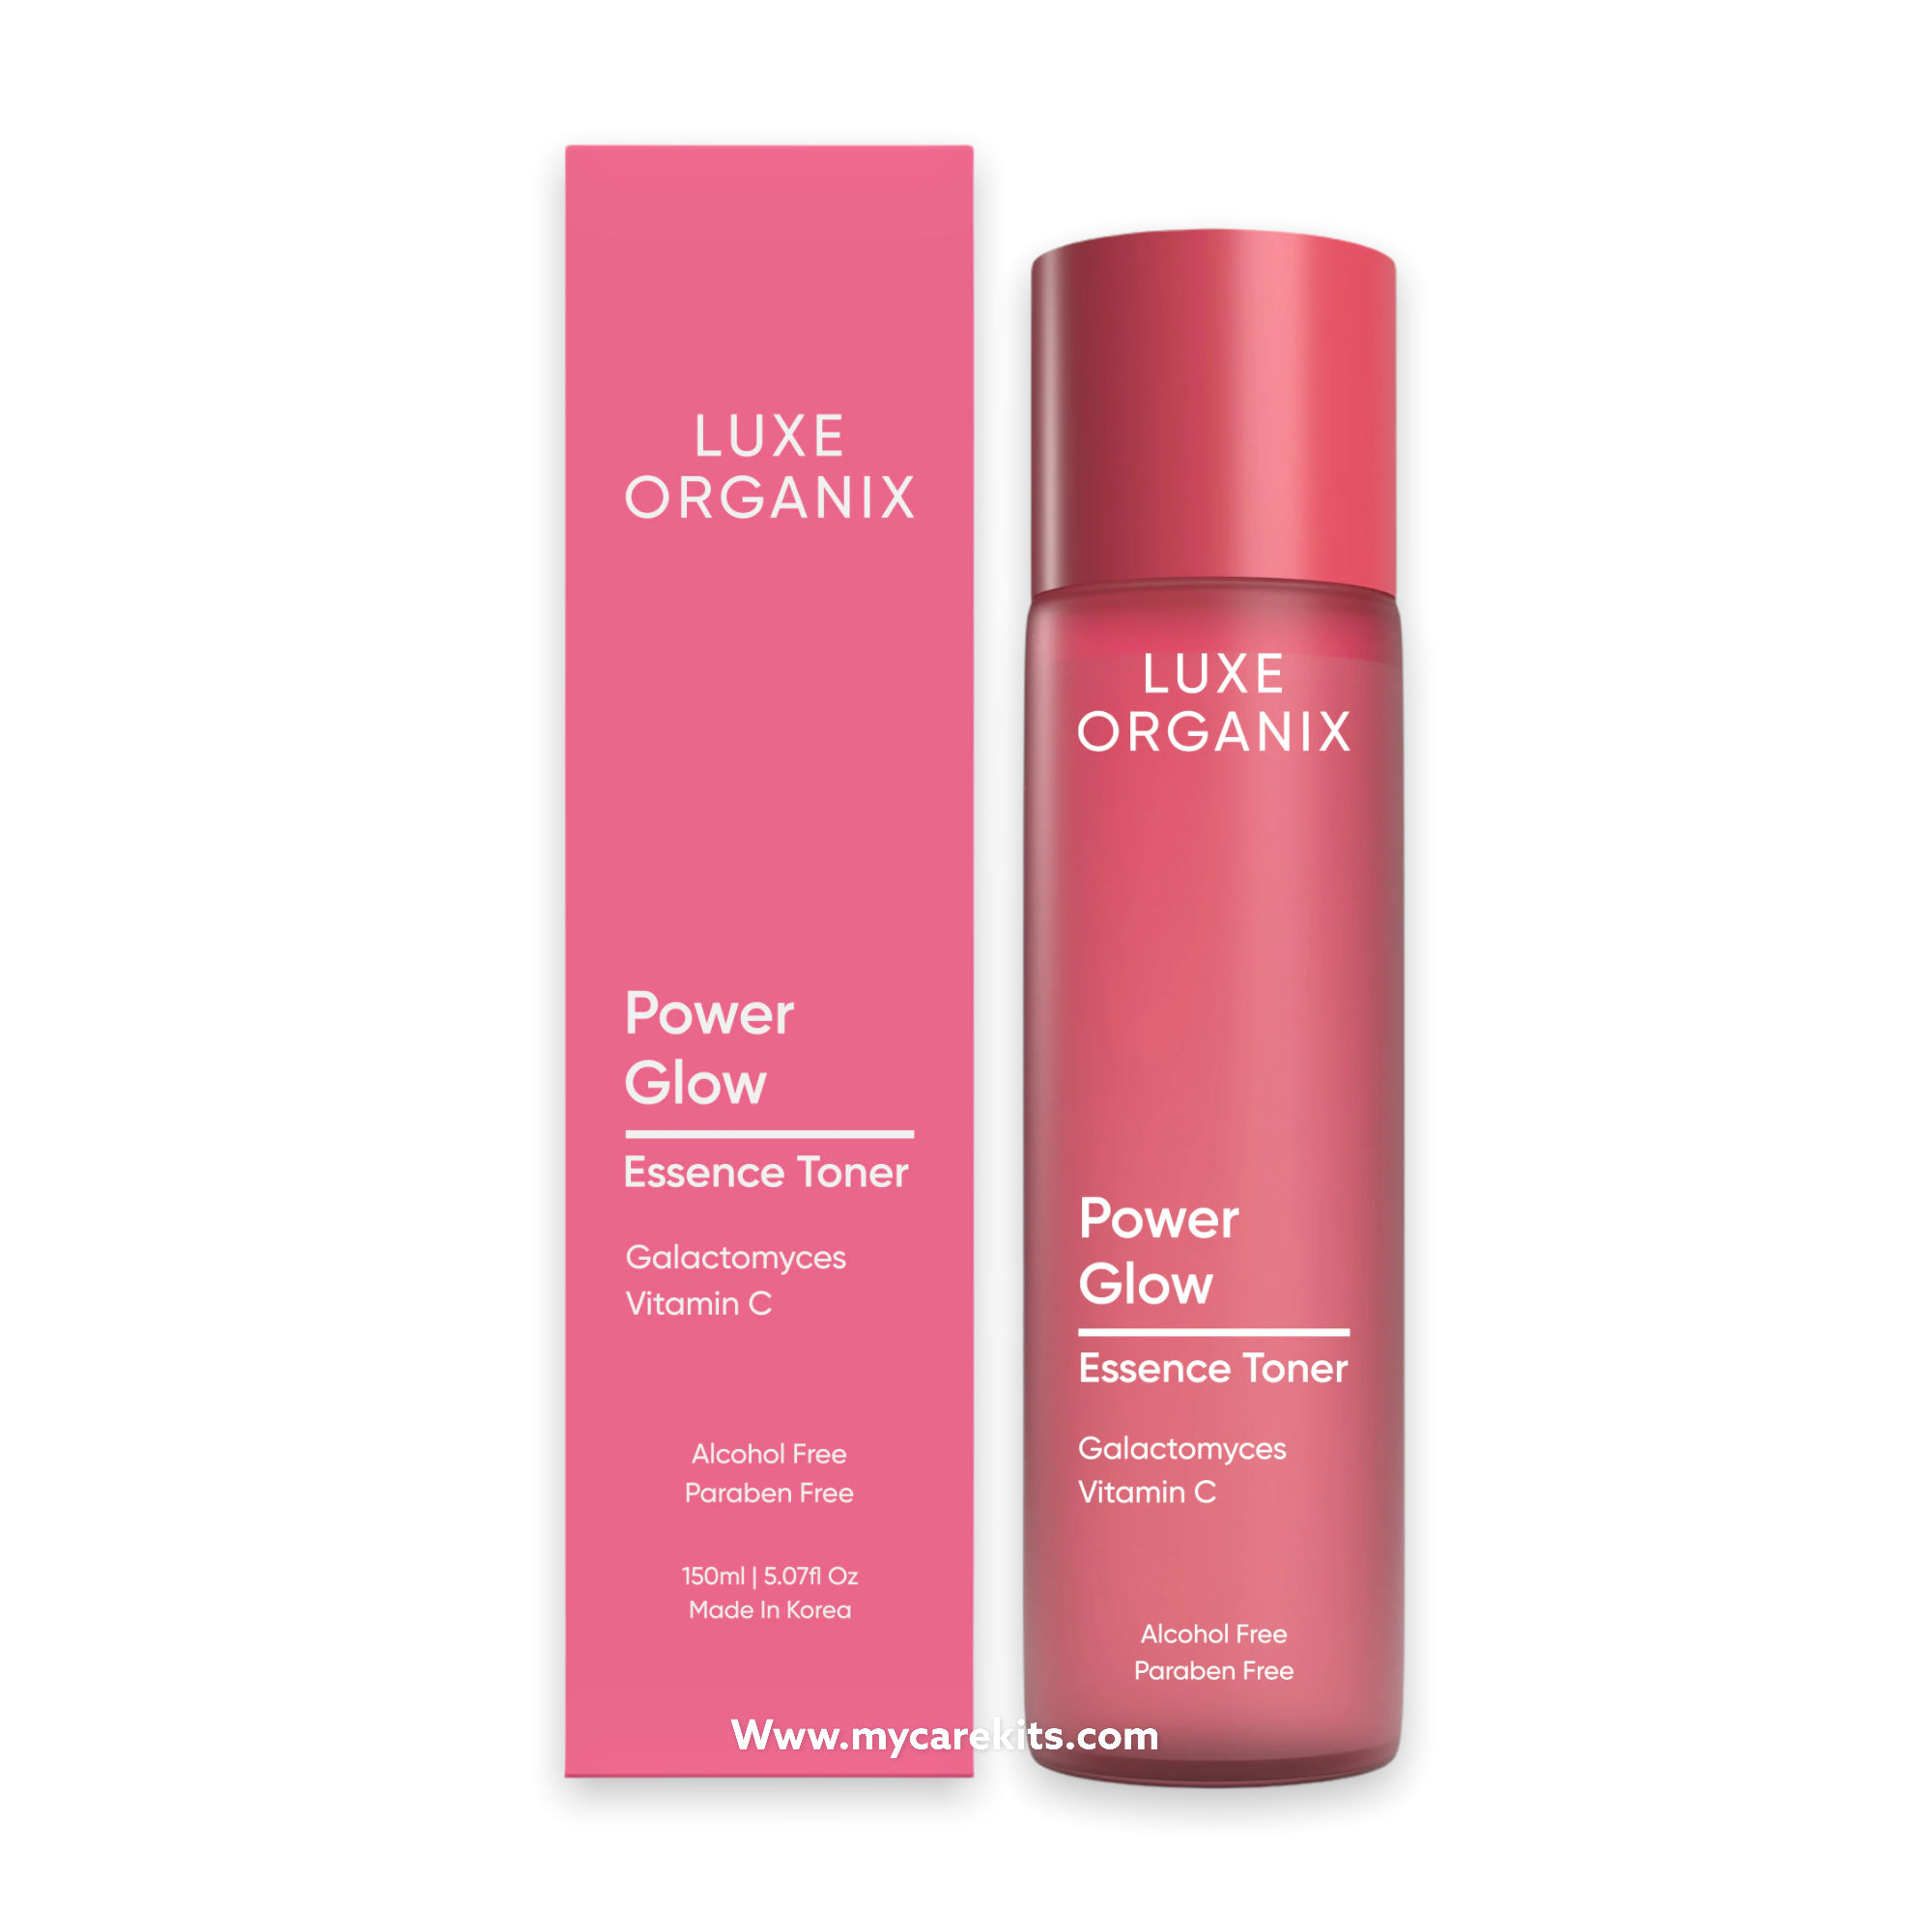 Luxe Organix Power Glow Essence Toner 150ml - ( Pink bottle )